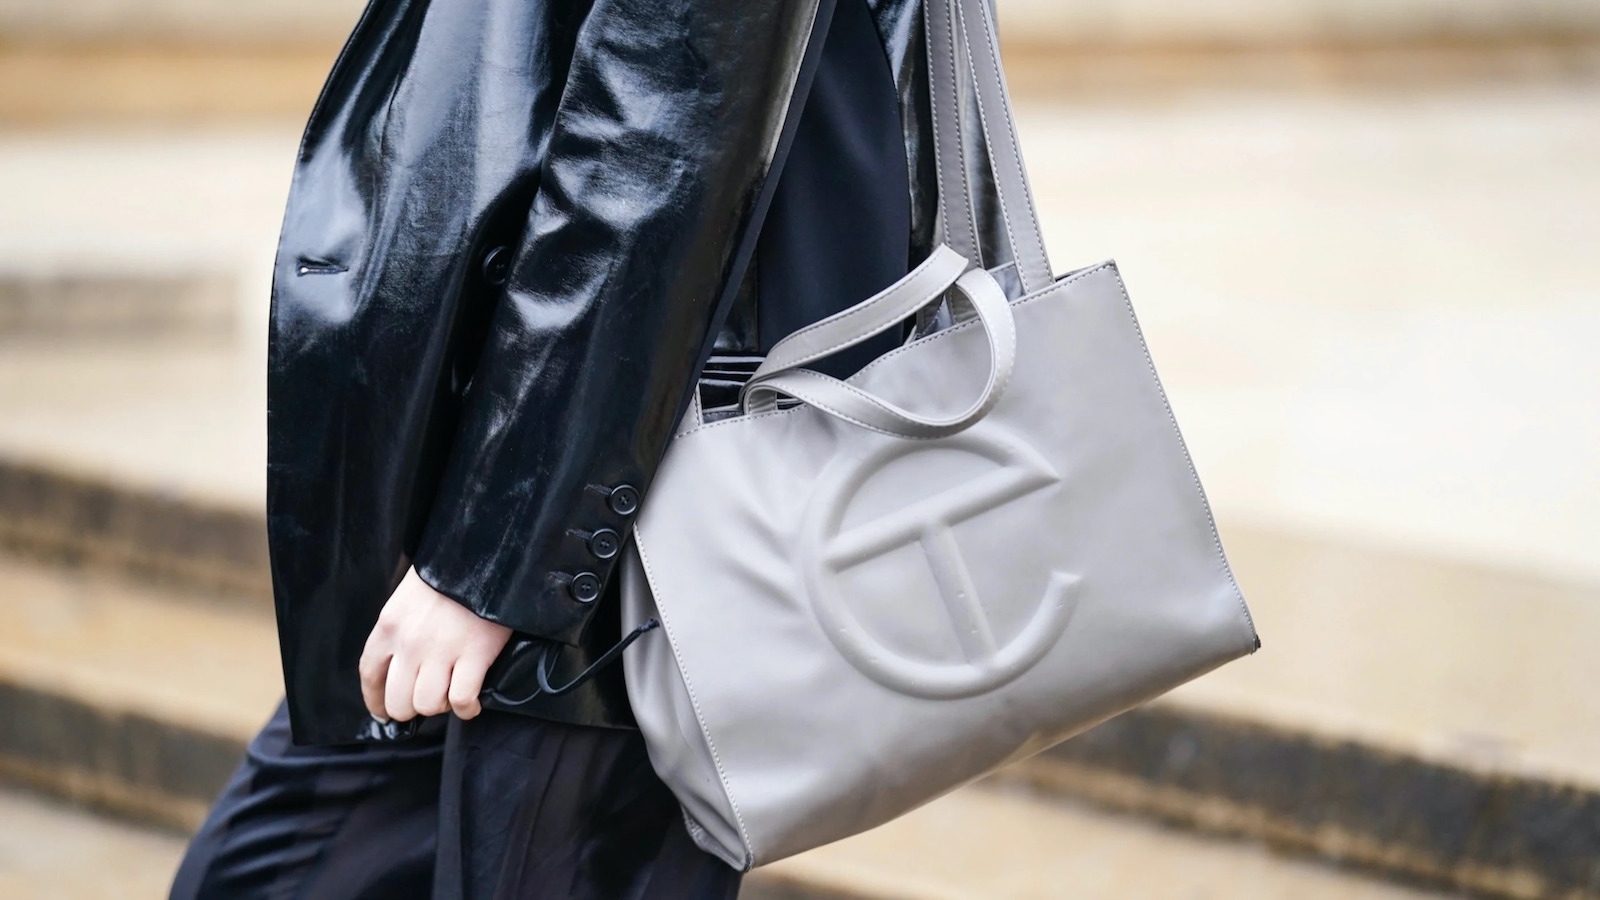 Sales of Telfar handbags set to soar after Beyonce champions affordable  vegan leather brand